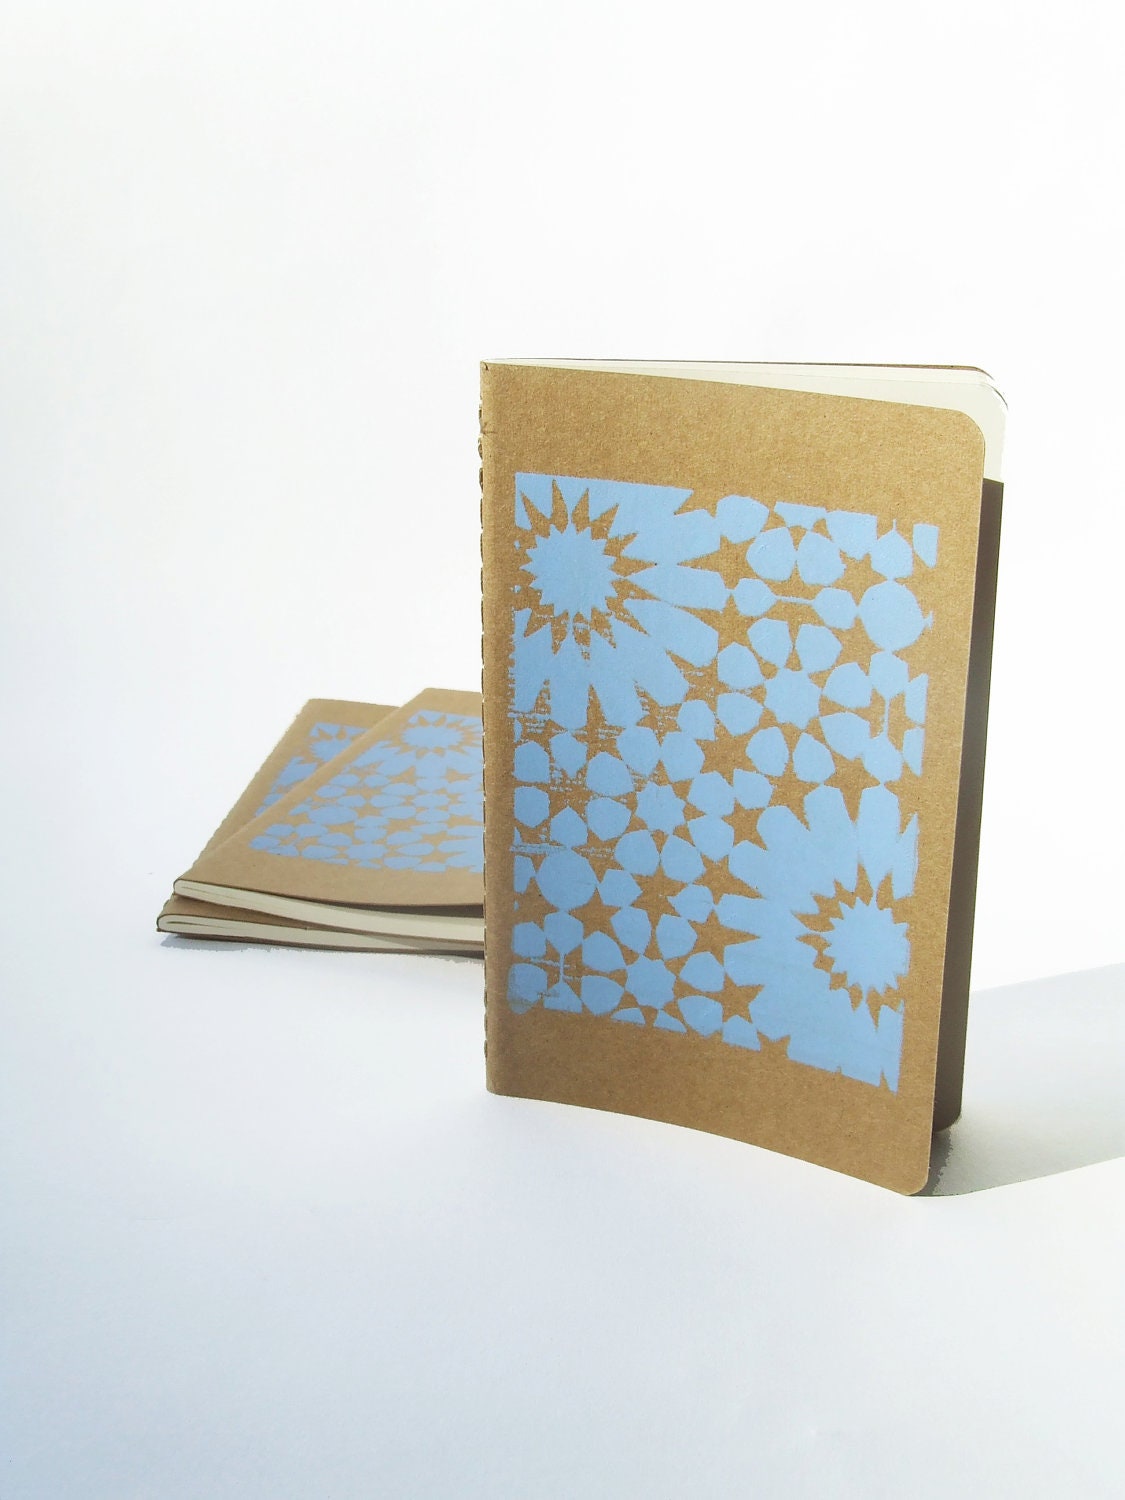 Pocket size Notebook with Moorish tile pattern by Alfamarama